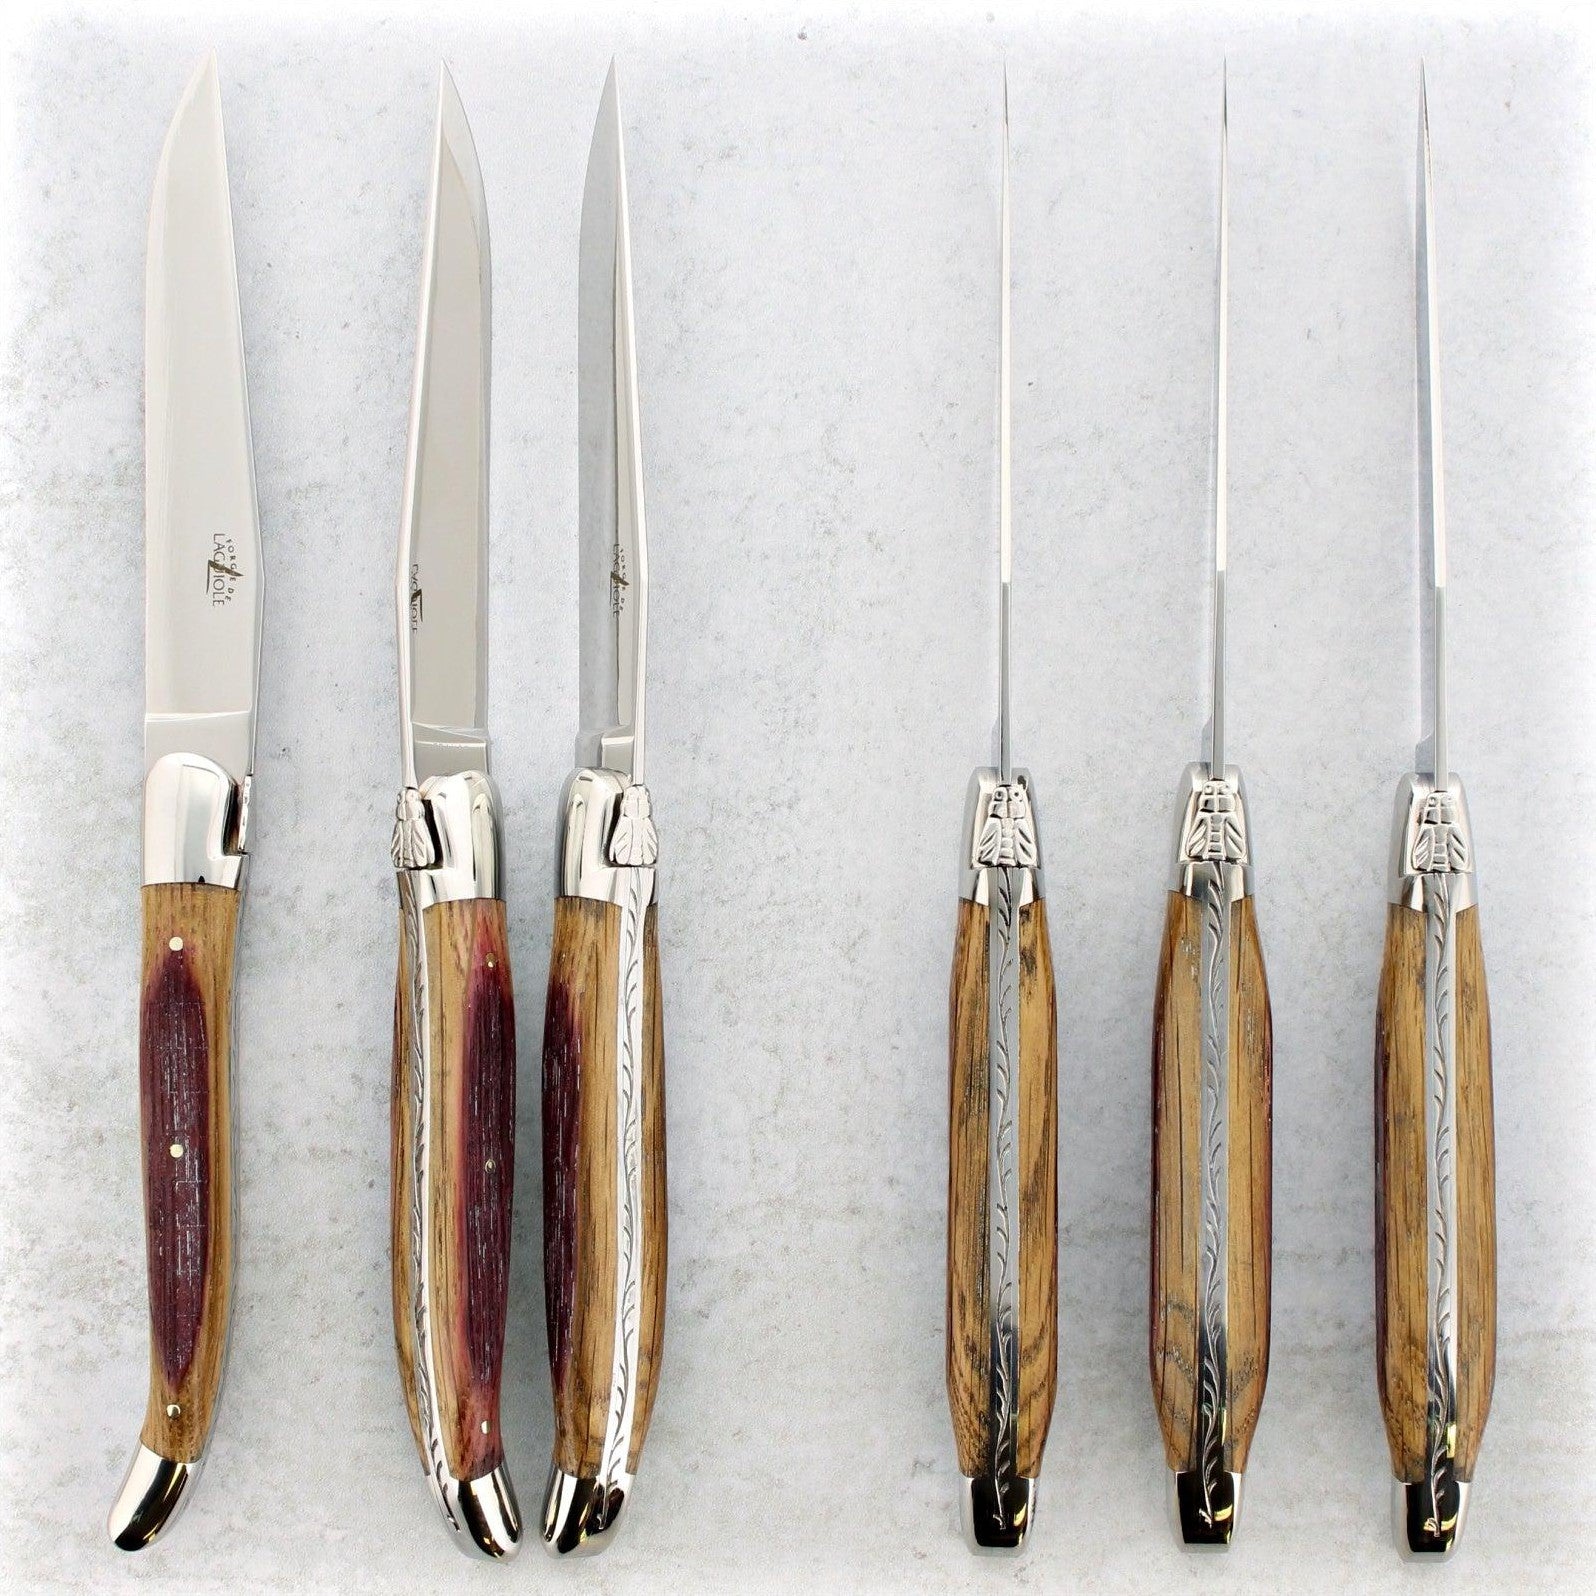 9 Laguiole 6-Piece Wooden Handle Steak Knife Gift Set